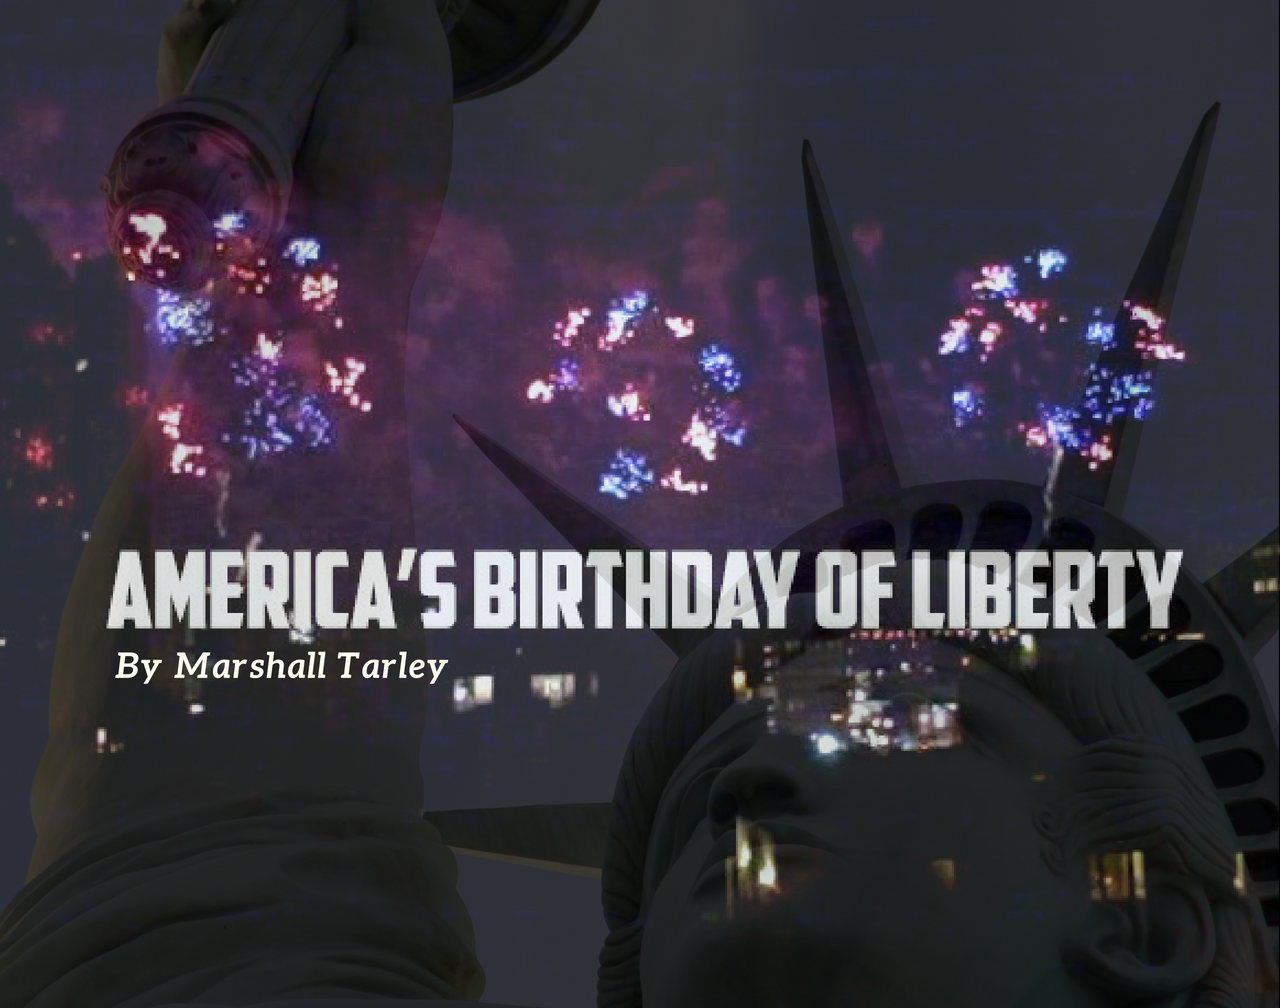 America's Birthday of Liberty by Marshall Tarley